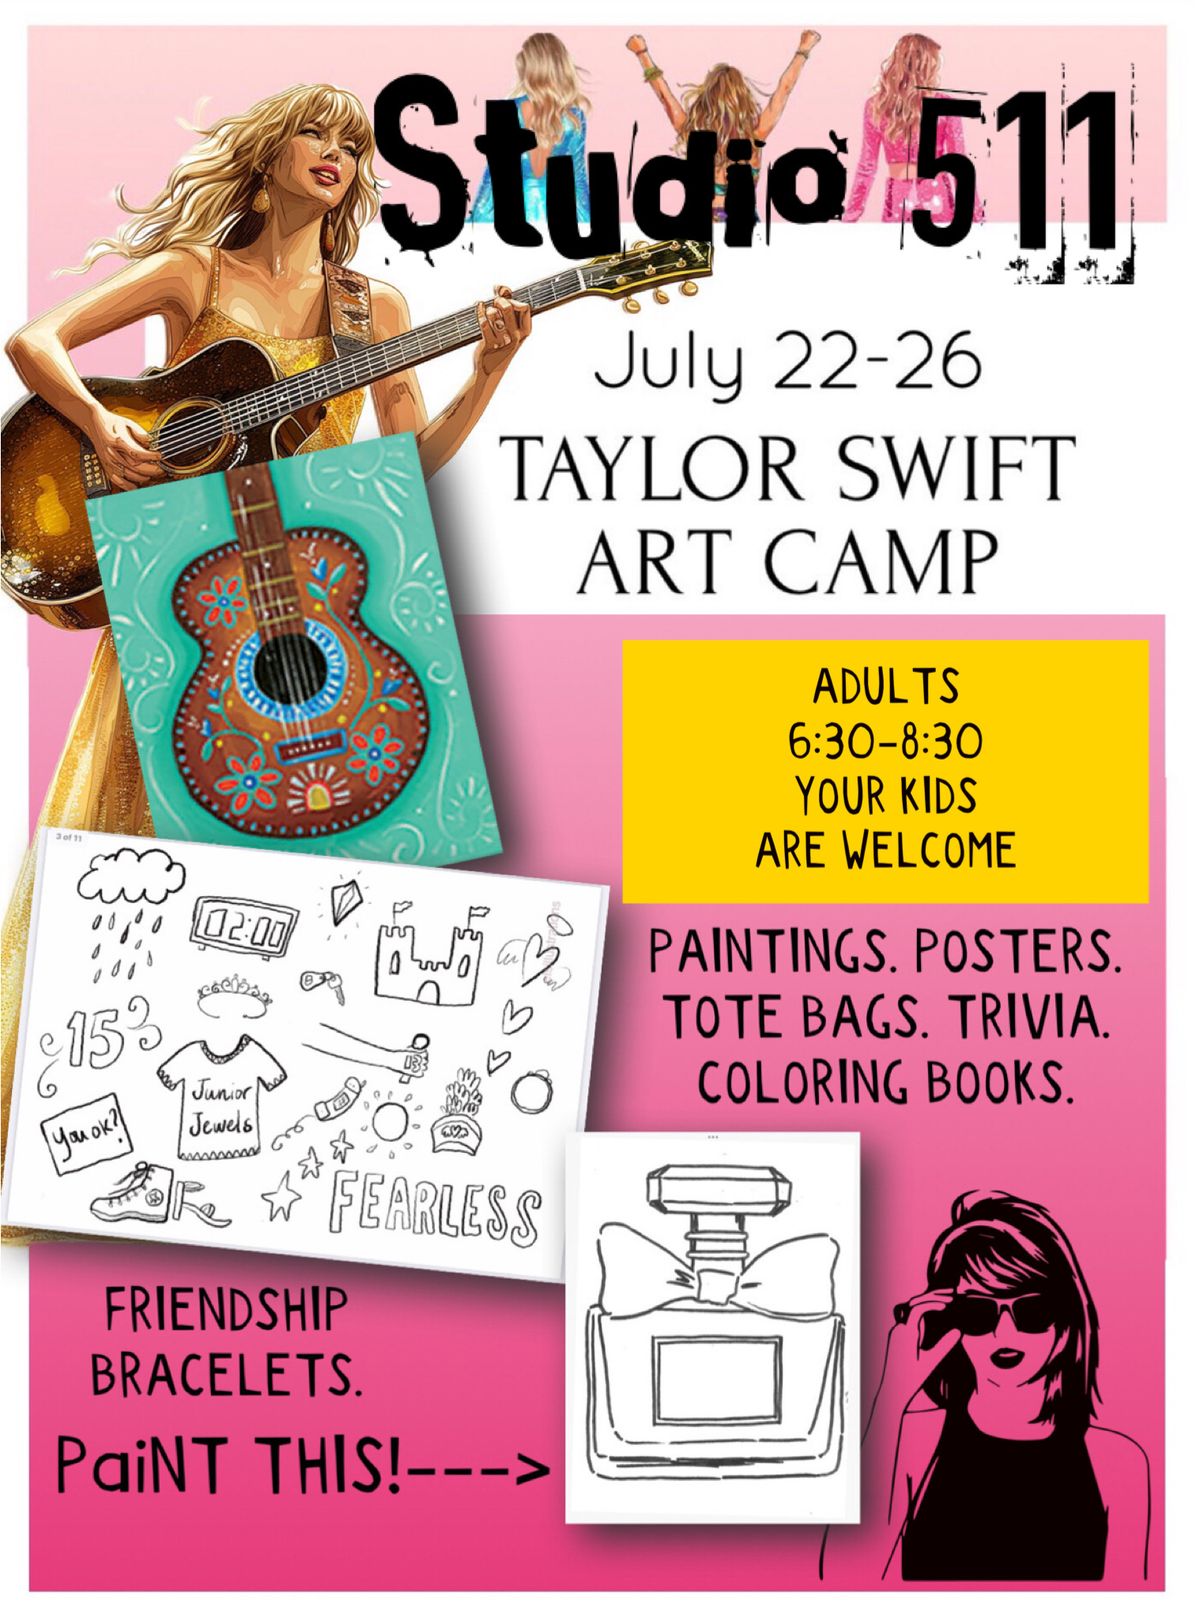 Evening Taylor Swift Art Camp